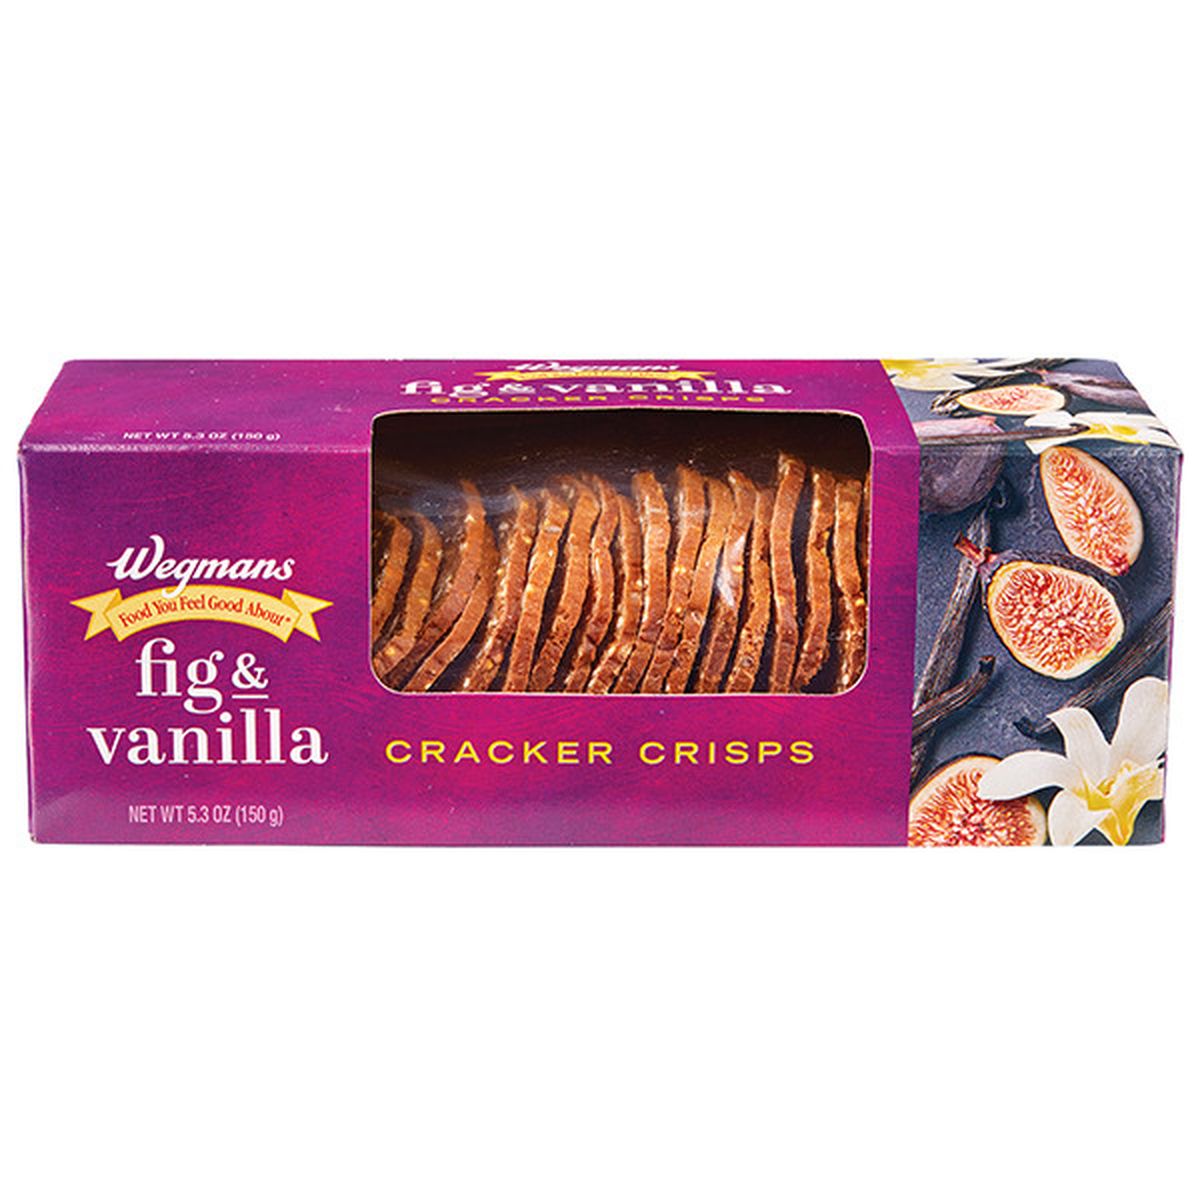 Calories in Wegmans Fig & Vanilla Cracker Crisps